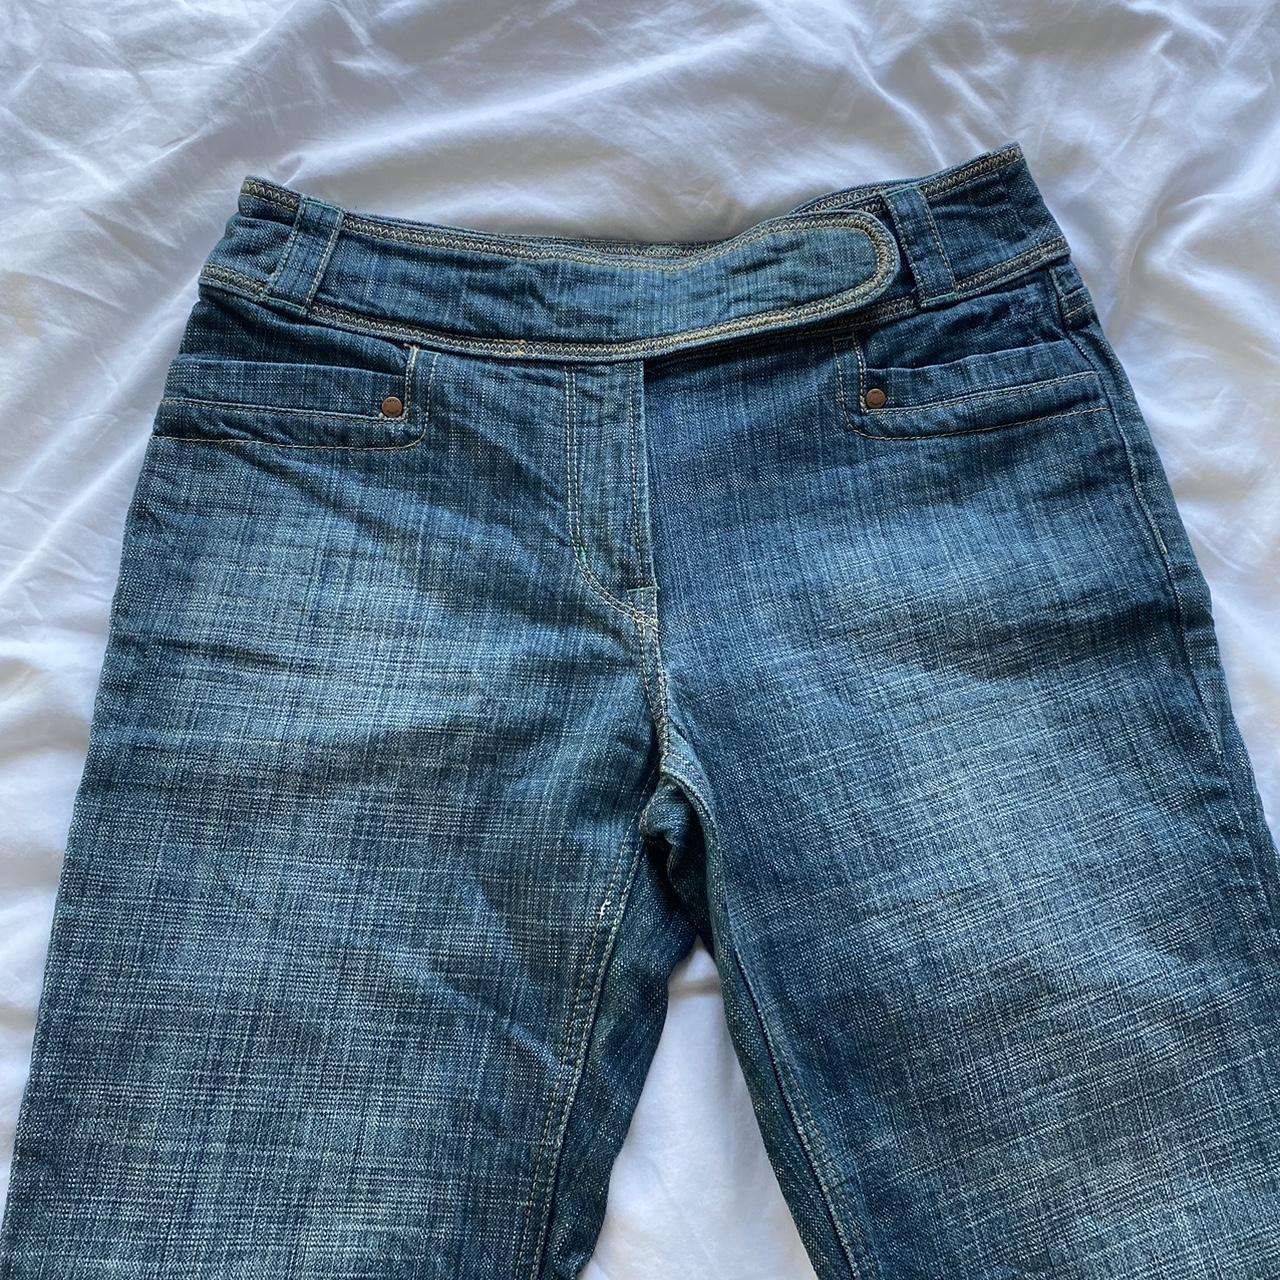 most beautiful vintage jeans with pocket detailing.... - Depop